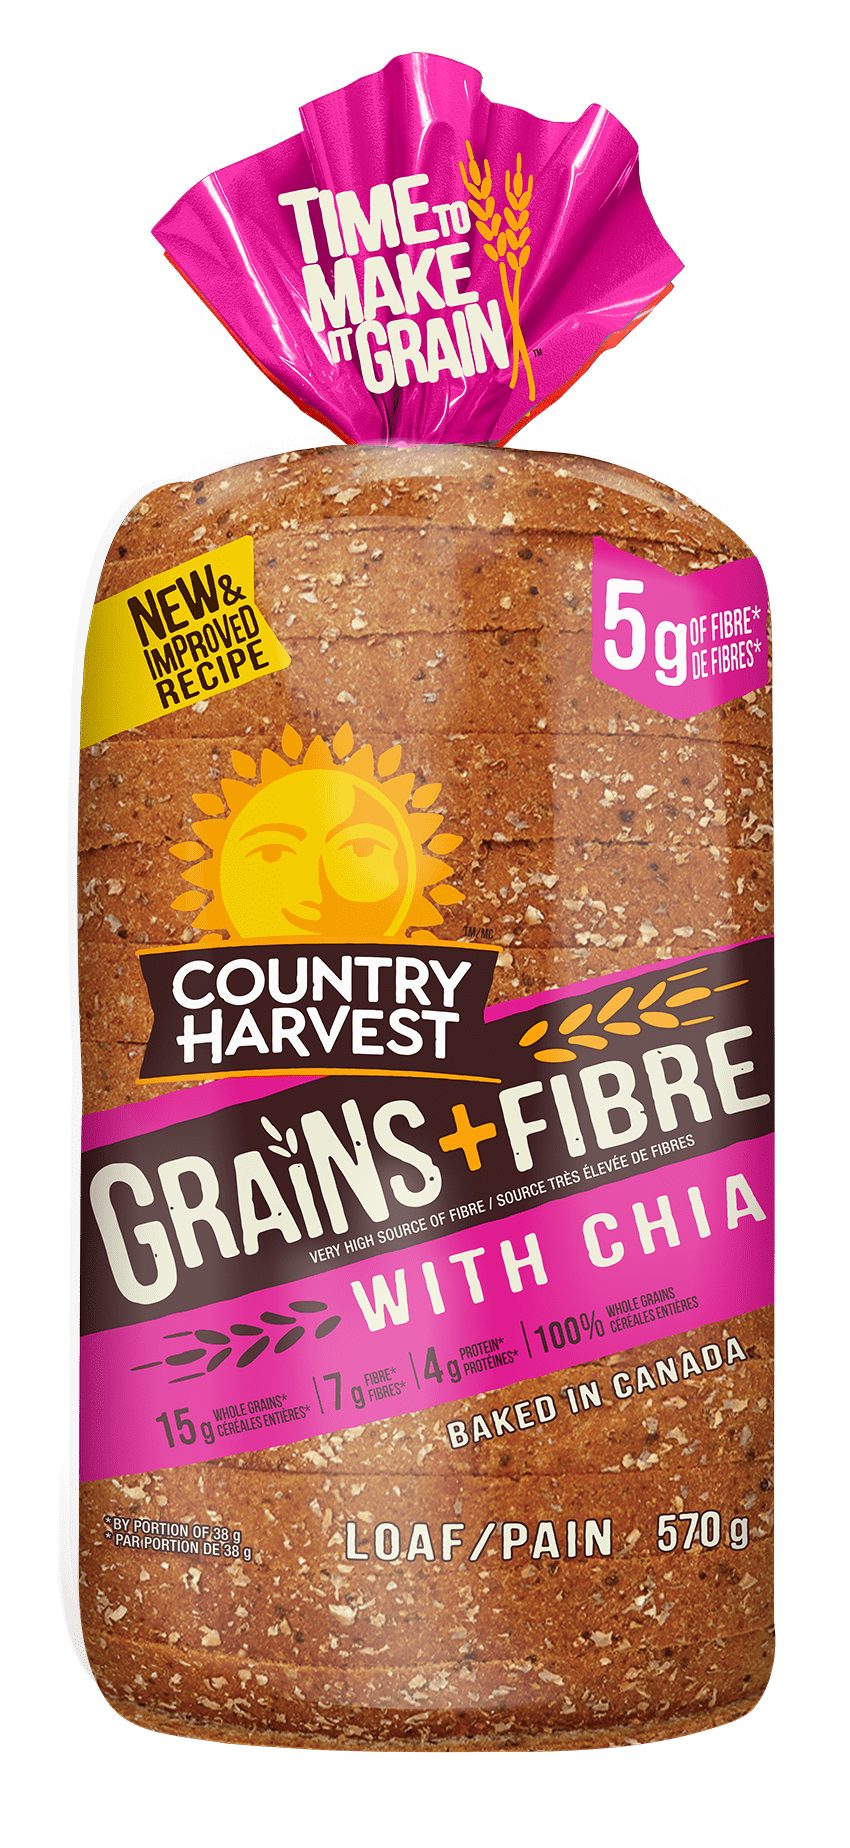 Country-Harvest-Fibre-Chia-Pack-min-min